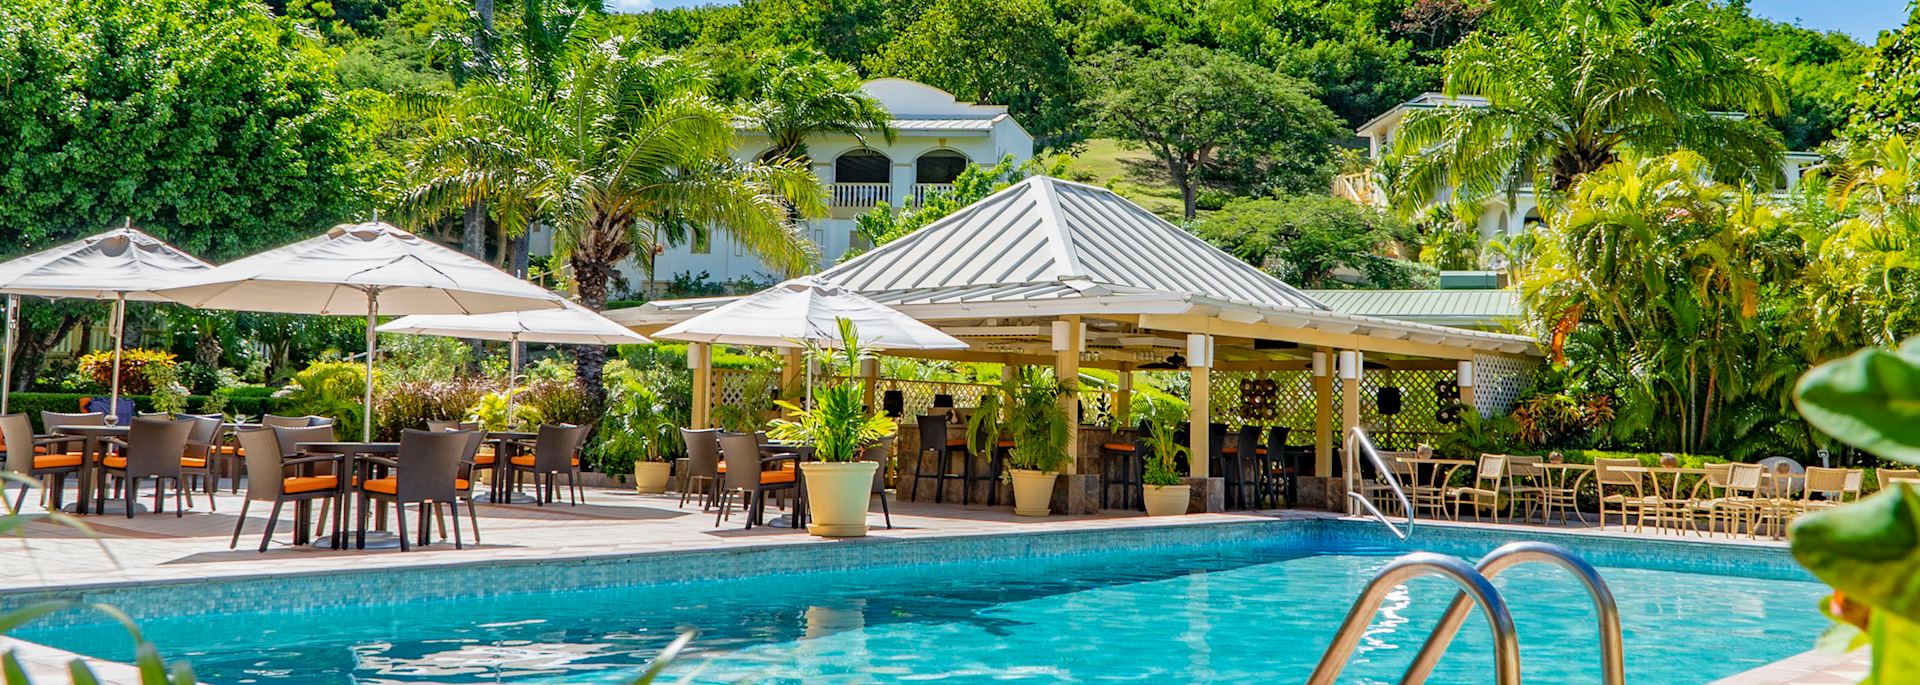 Blue Horizons Garden Resort pool, Grenada